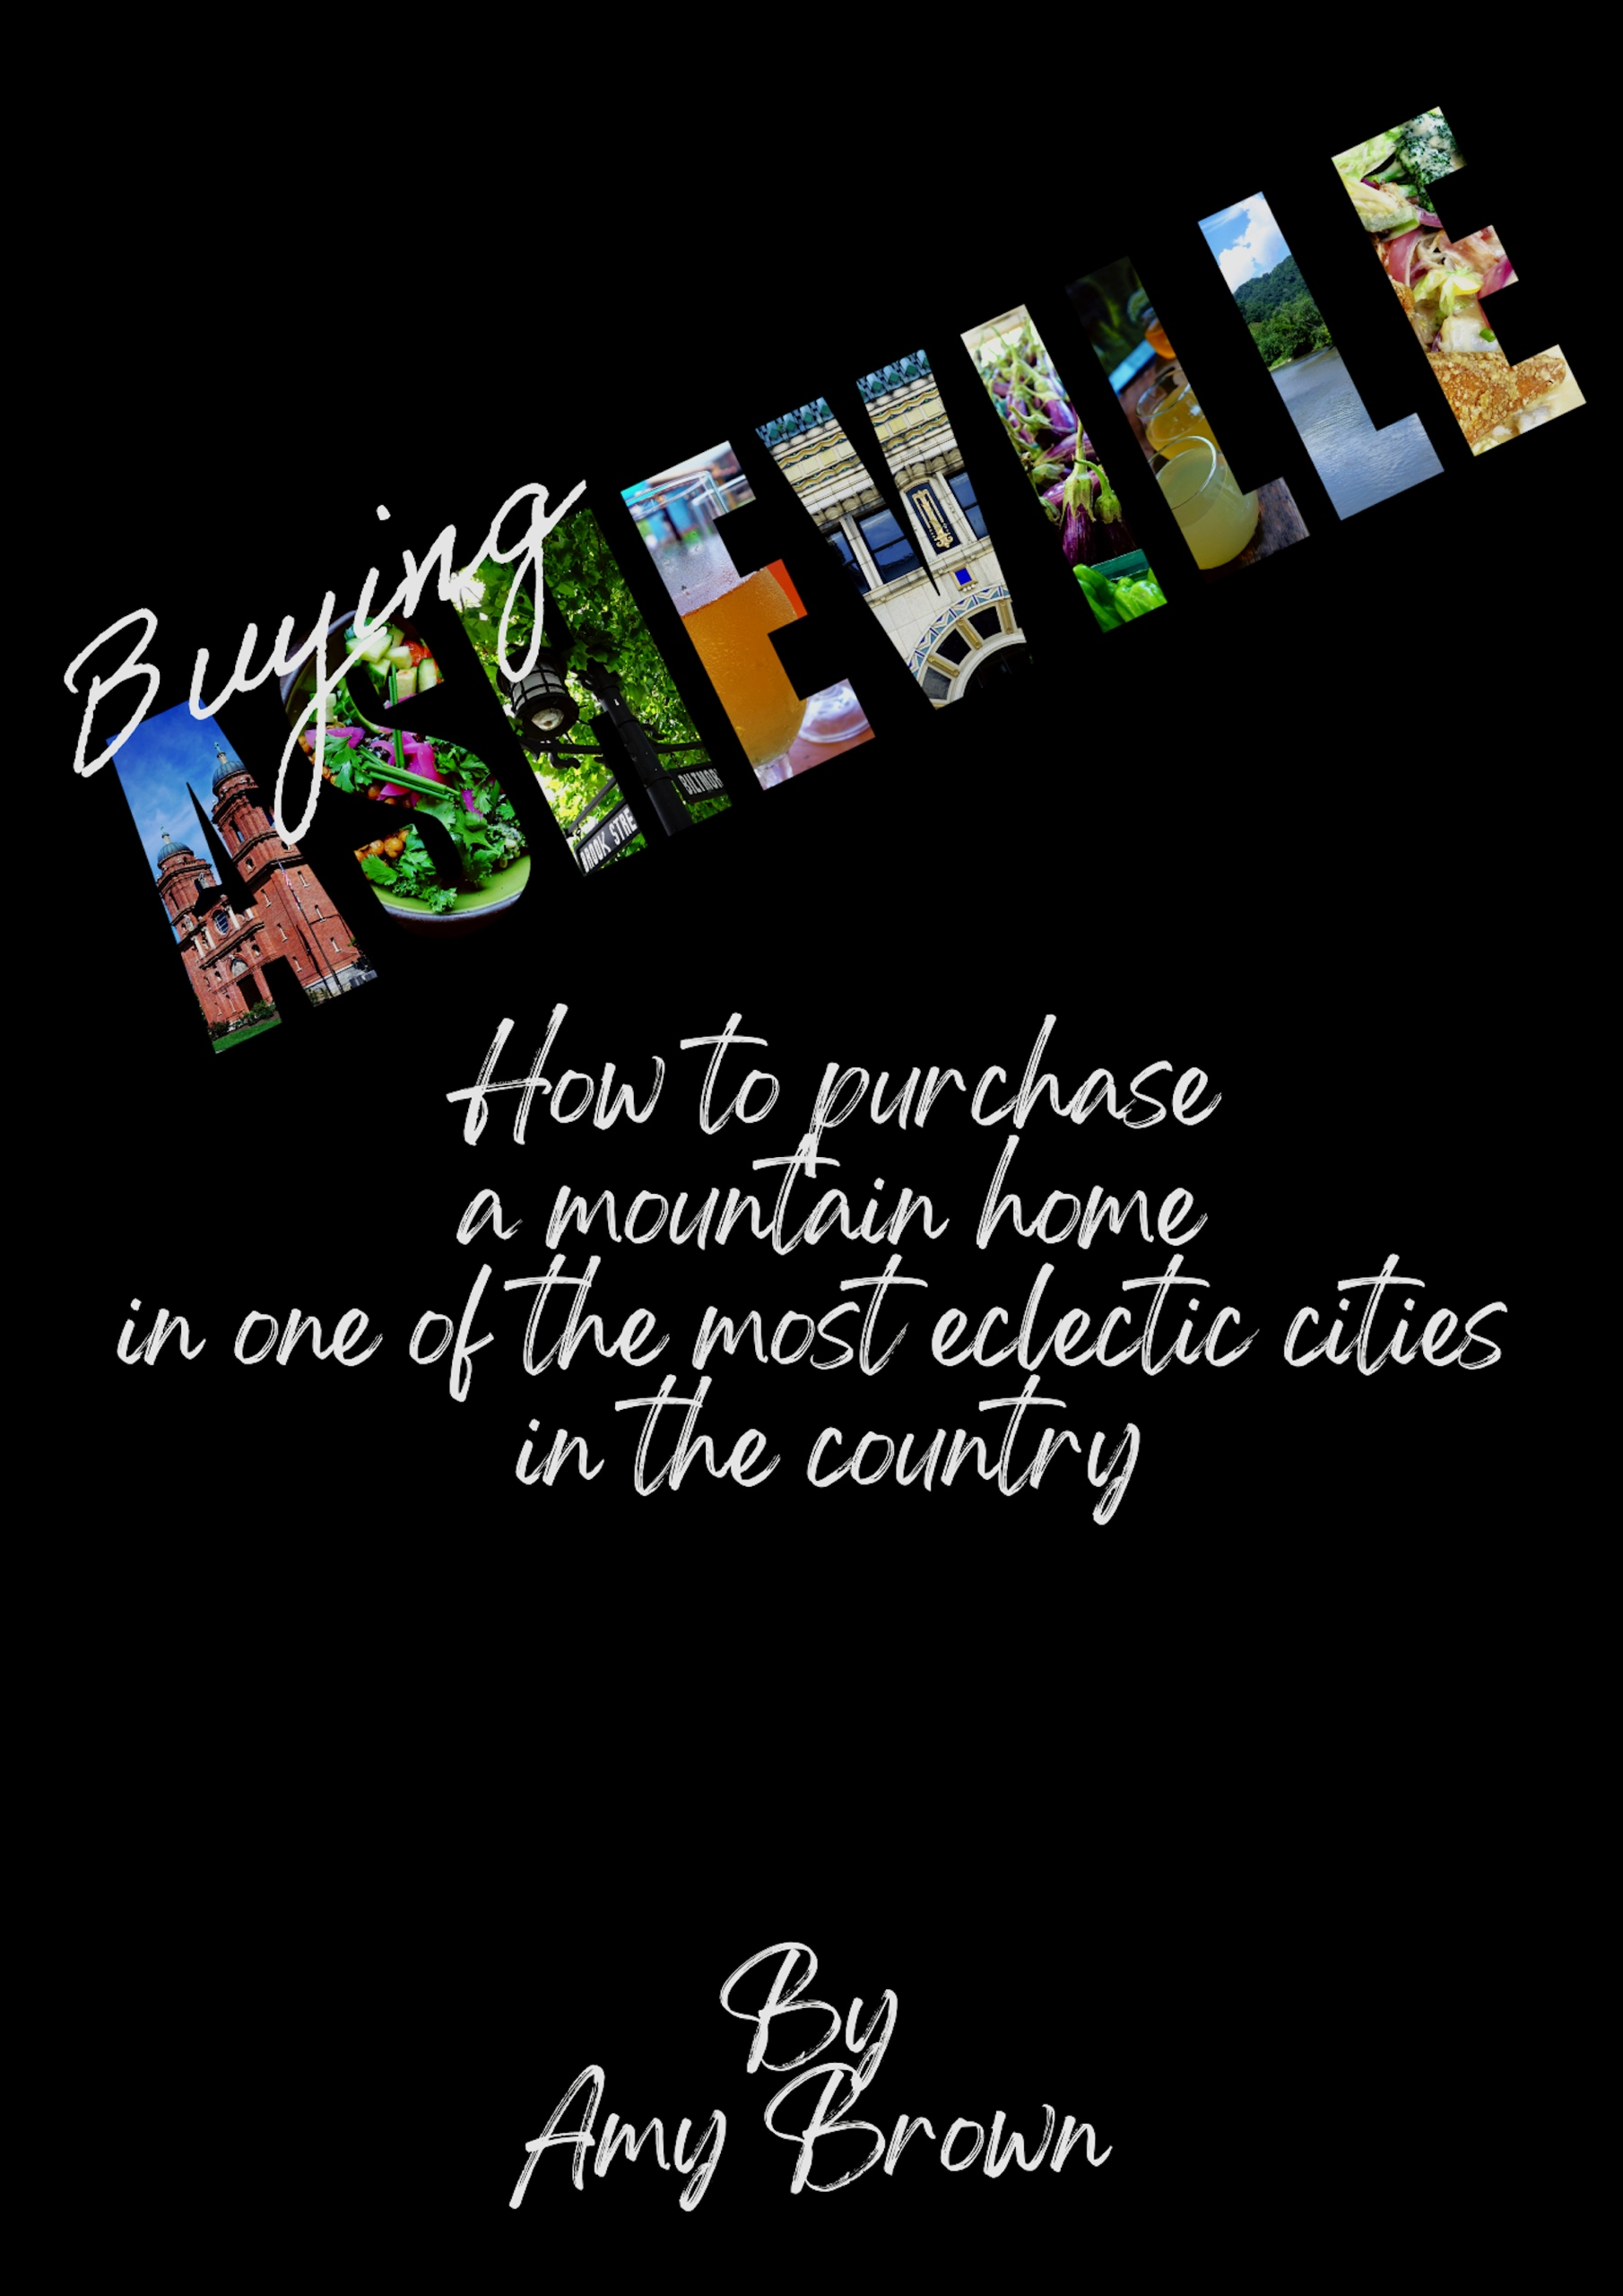 Buying-Asheville-image.png